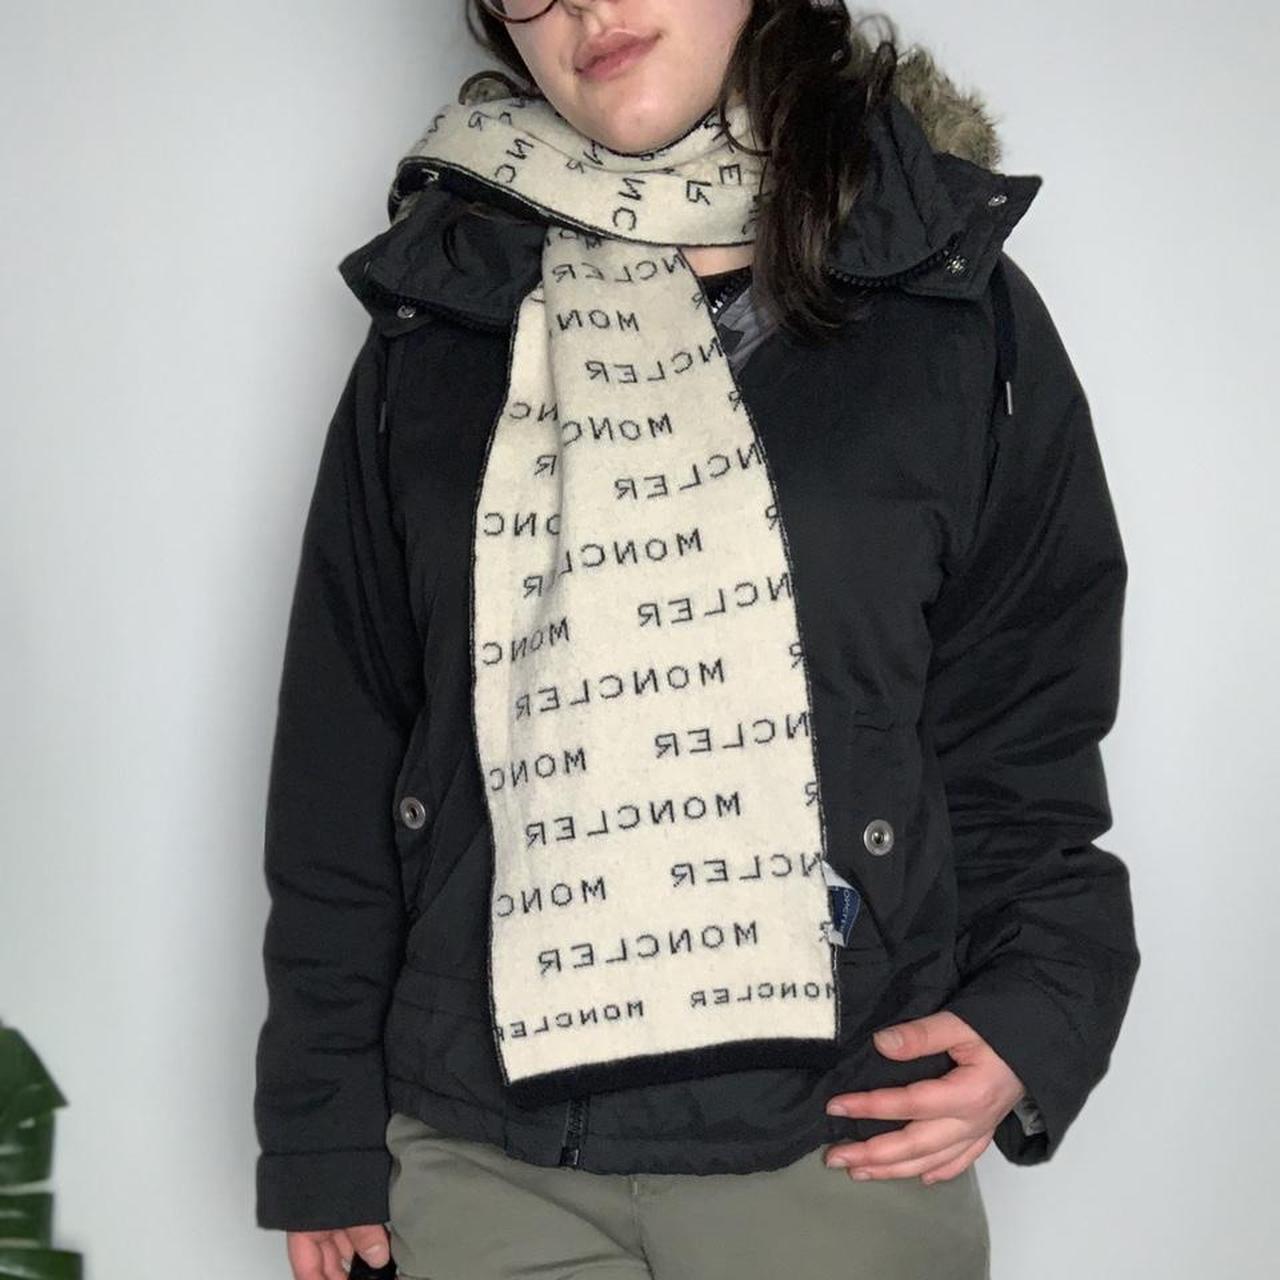 MONCLER deadstock rare woollen knit vintage 90s monogram scarf